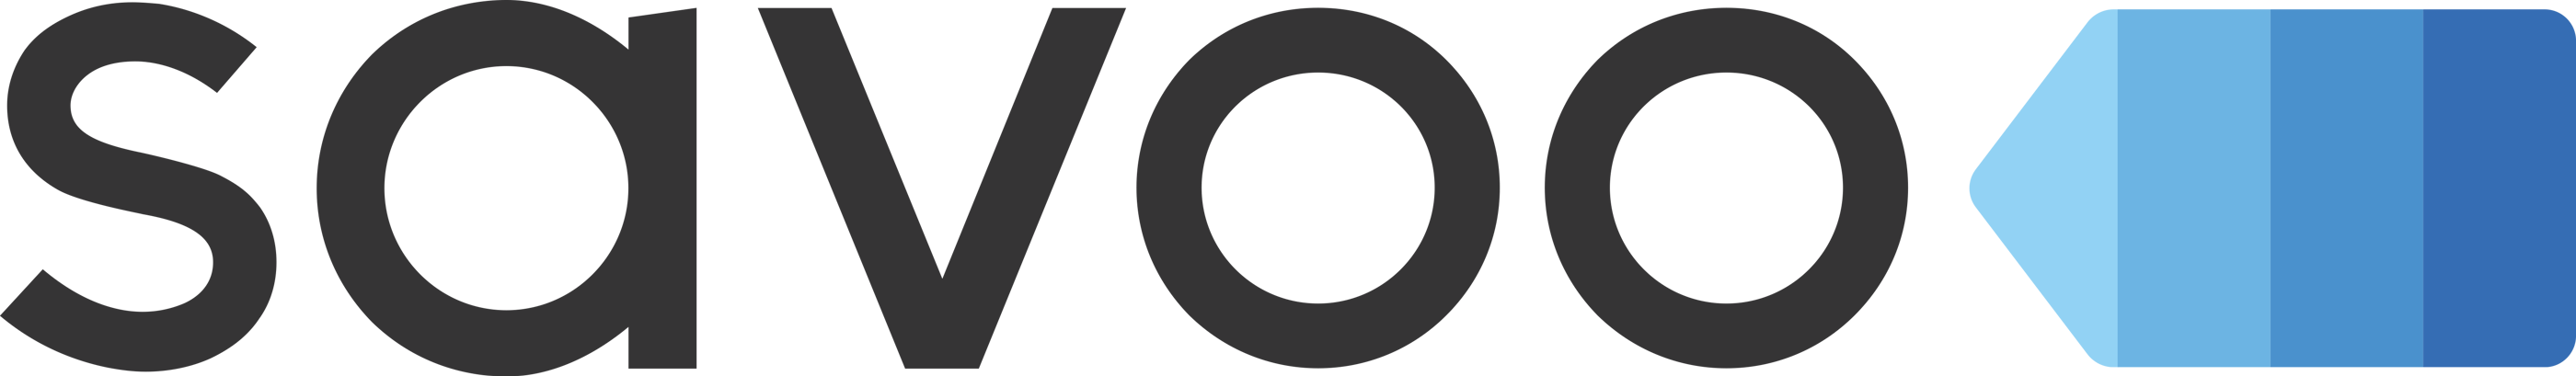 savoo logo 